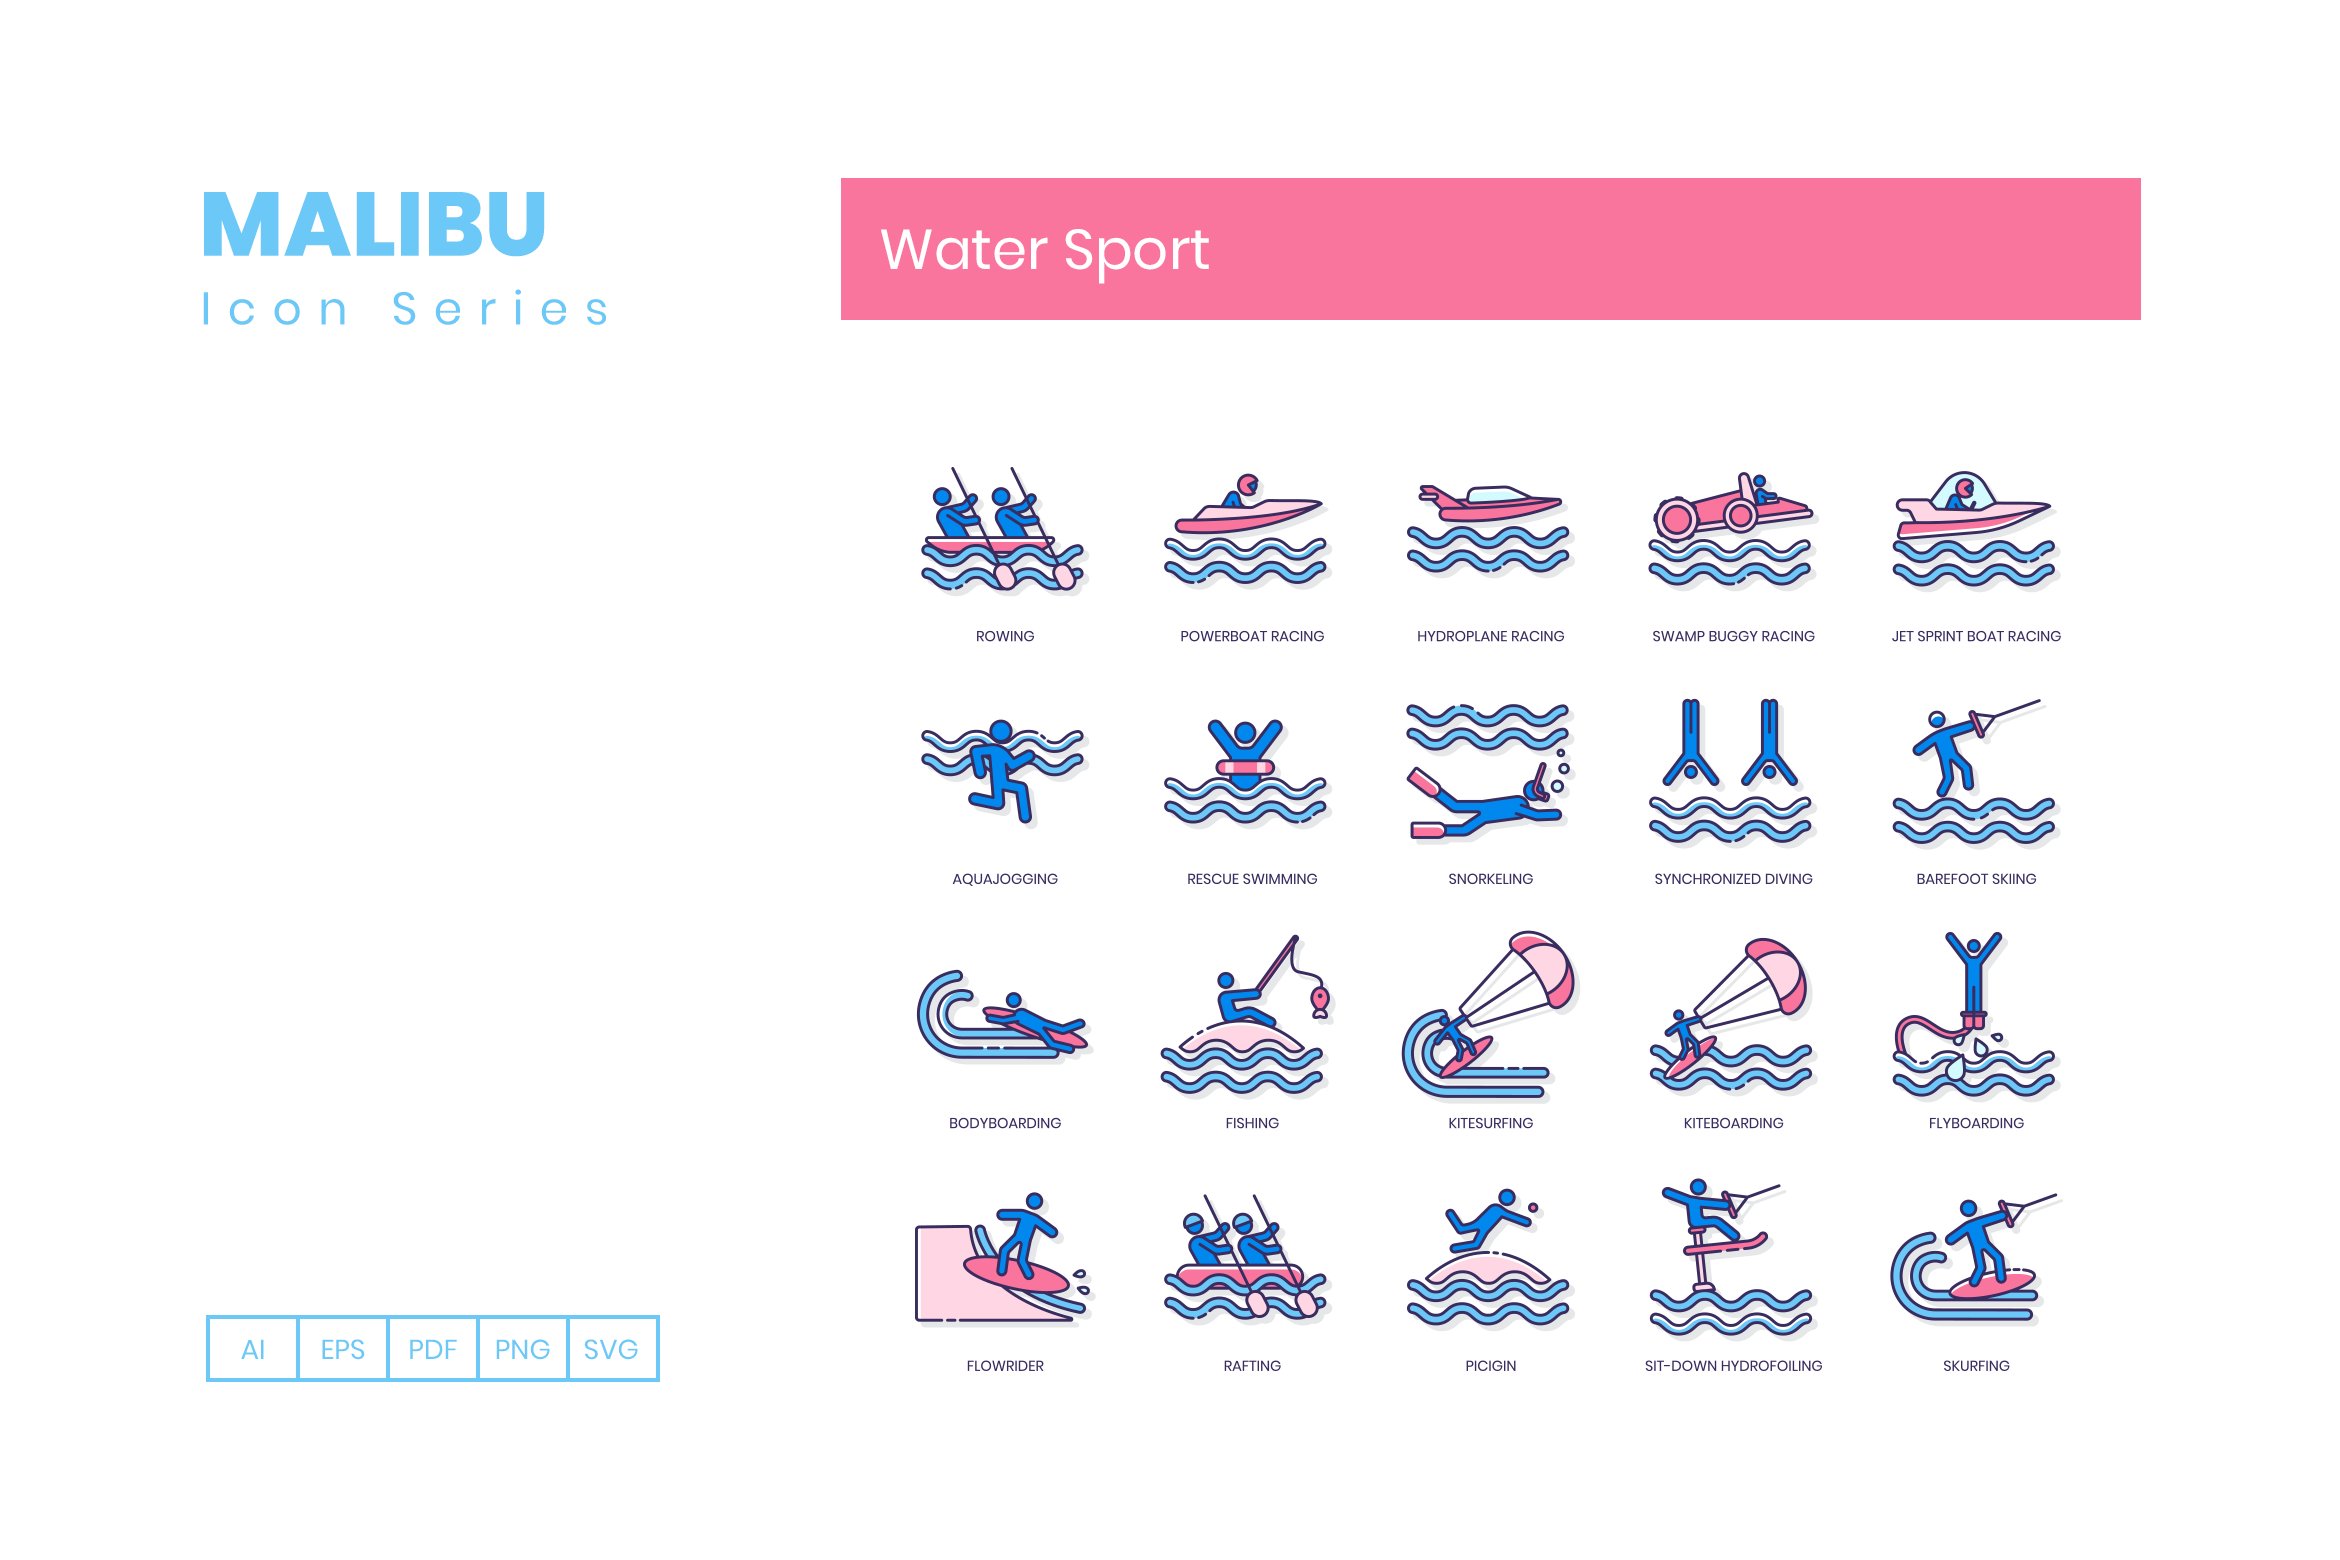 water sport icons malibu cm 2 37